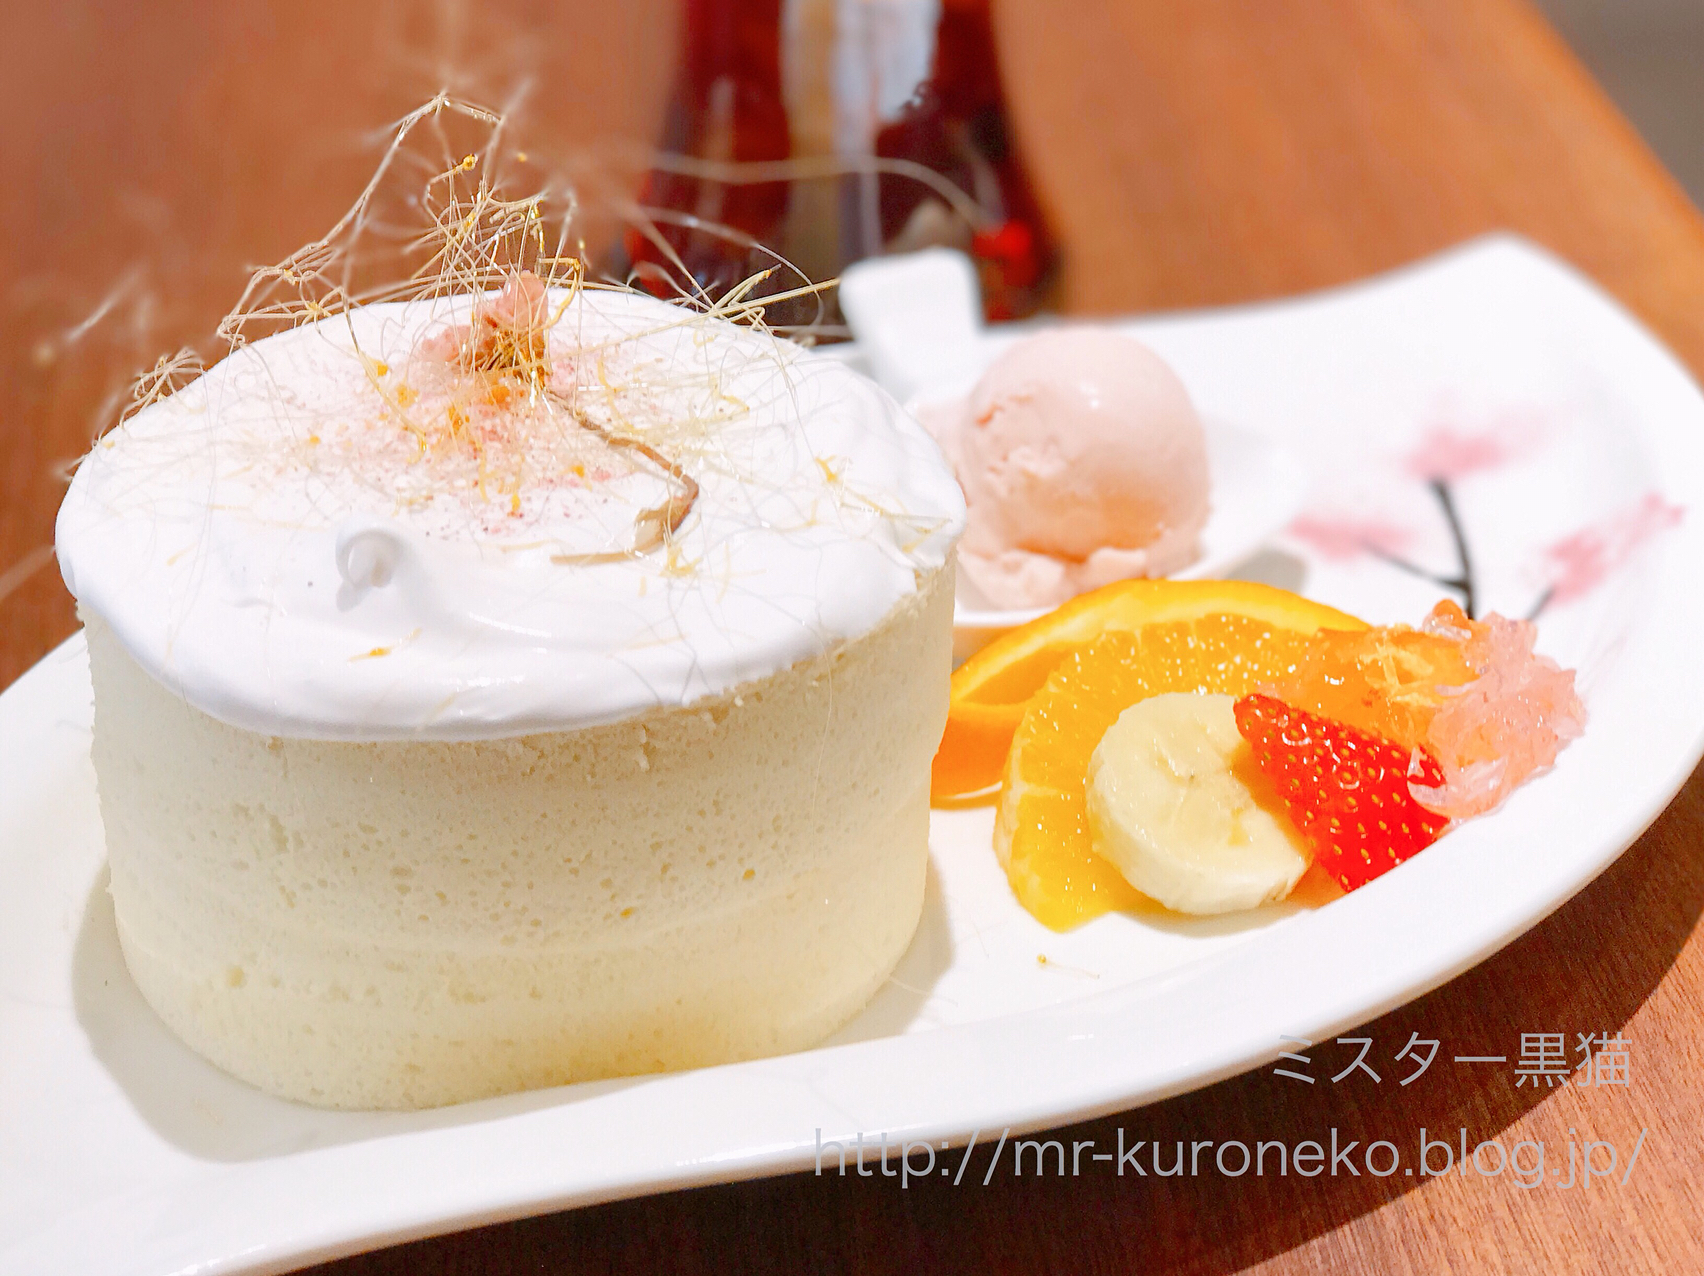 Sweets Smile スイーツ スマイル 札幌 今月のパンケーキ 桜のパンケーキ ミスター黒猫のカフェめぐり パンケーキを日本一実食